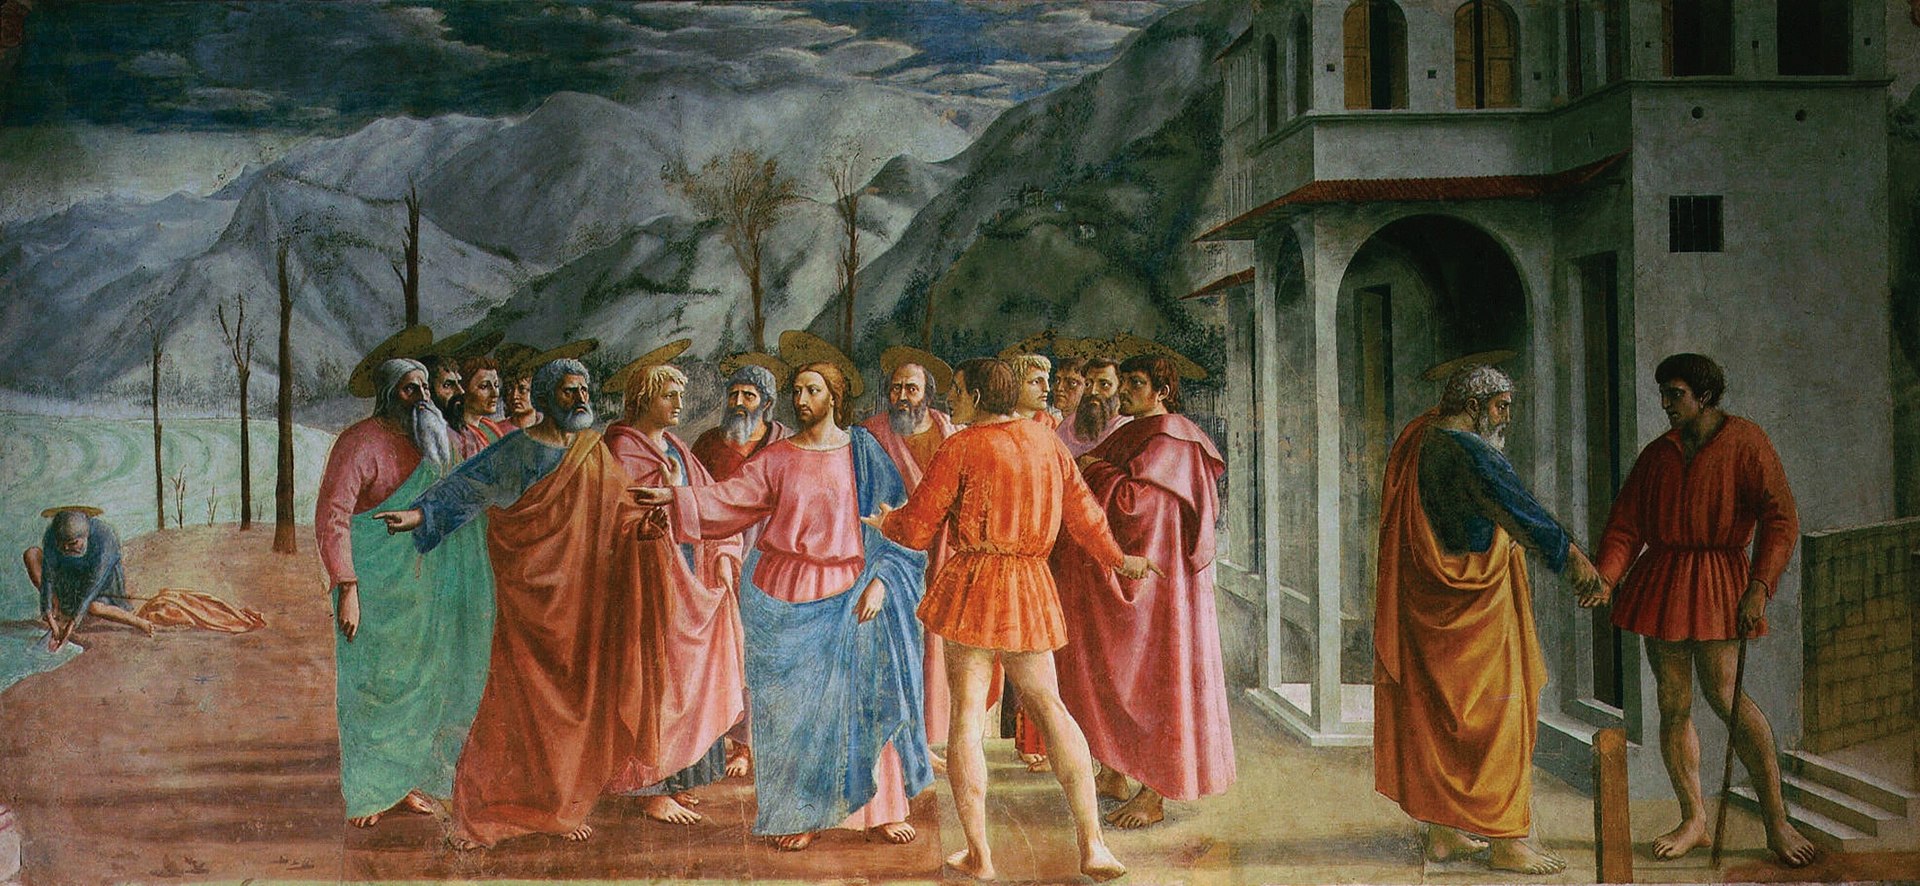 https://upload.wikimedia.org/wikipedia/commons/thumb/b/b0/Masaccio7.jpg/1920px-Masaccio7.jpg